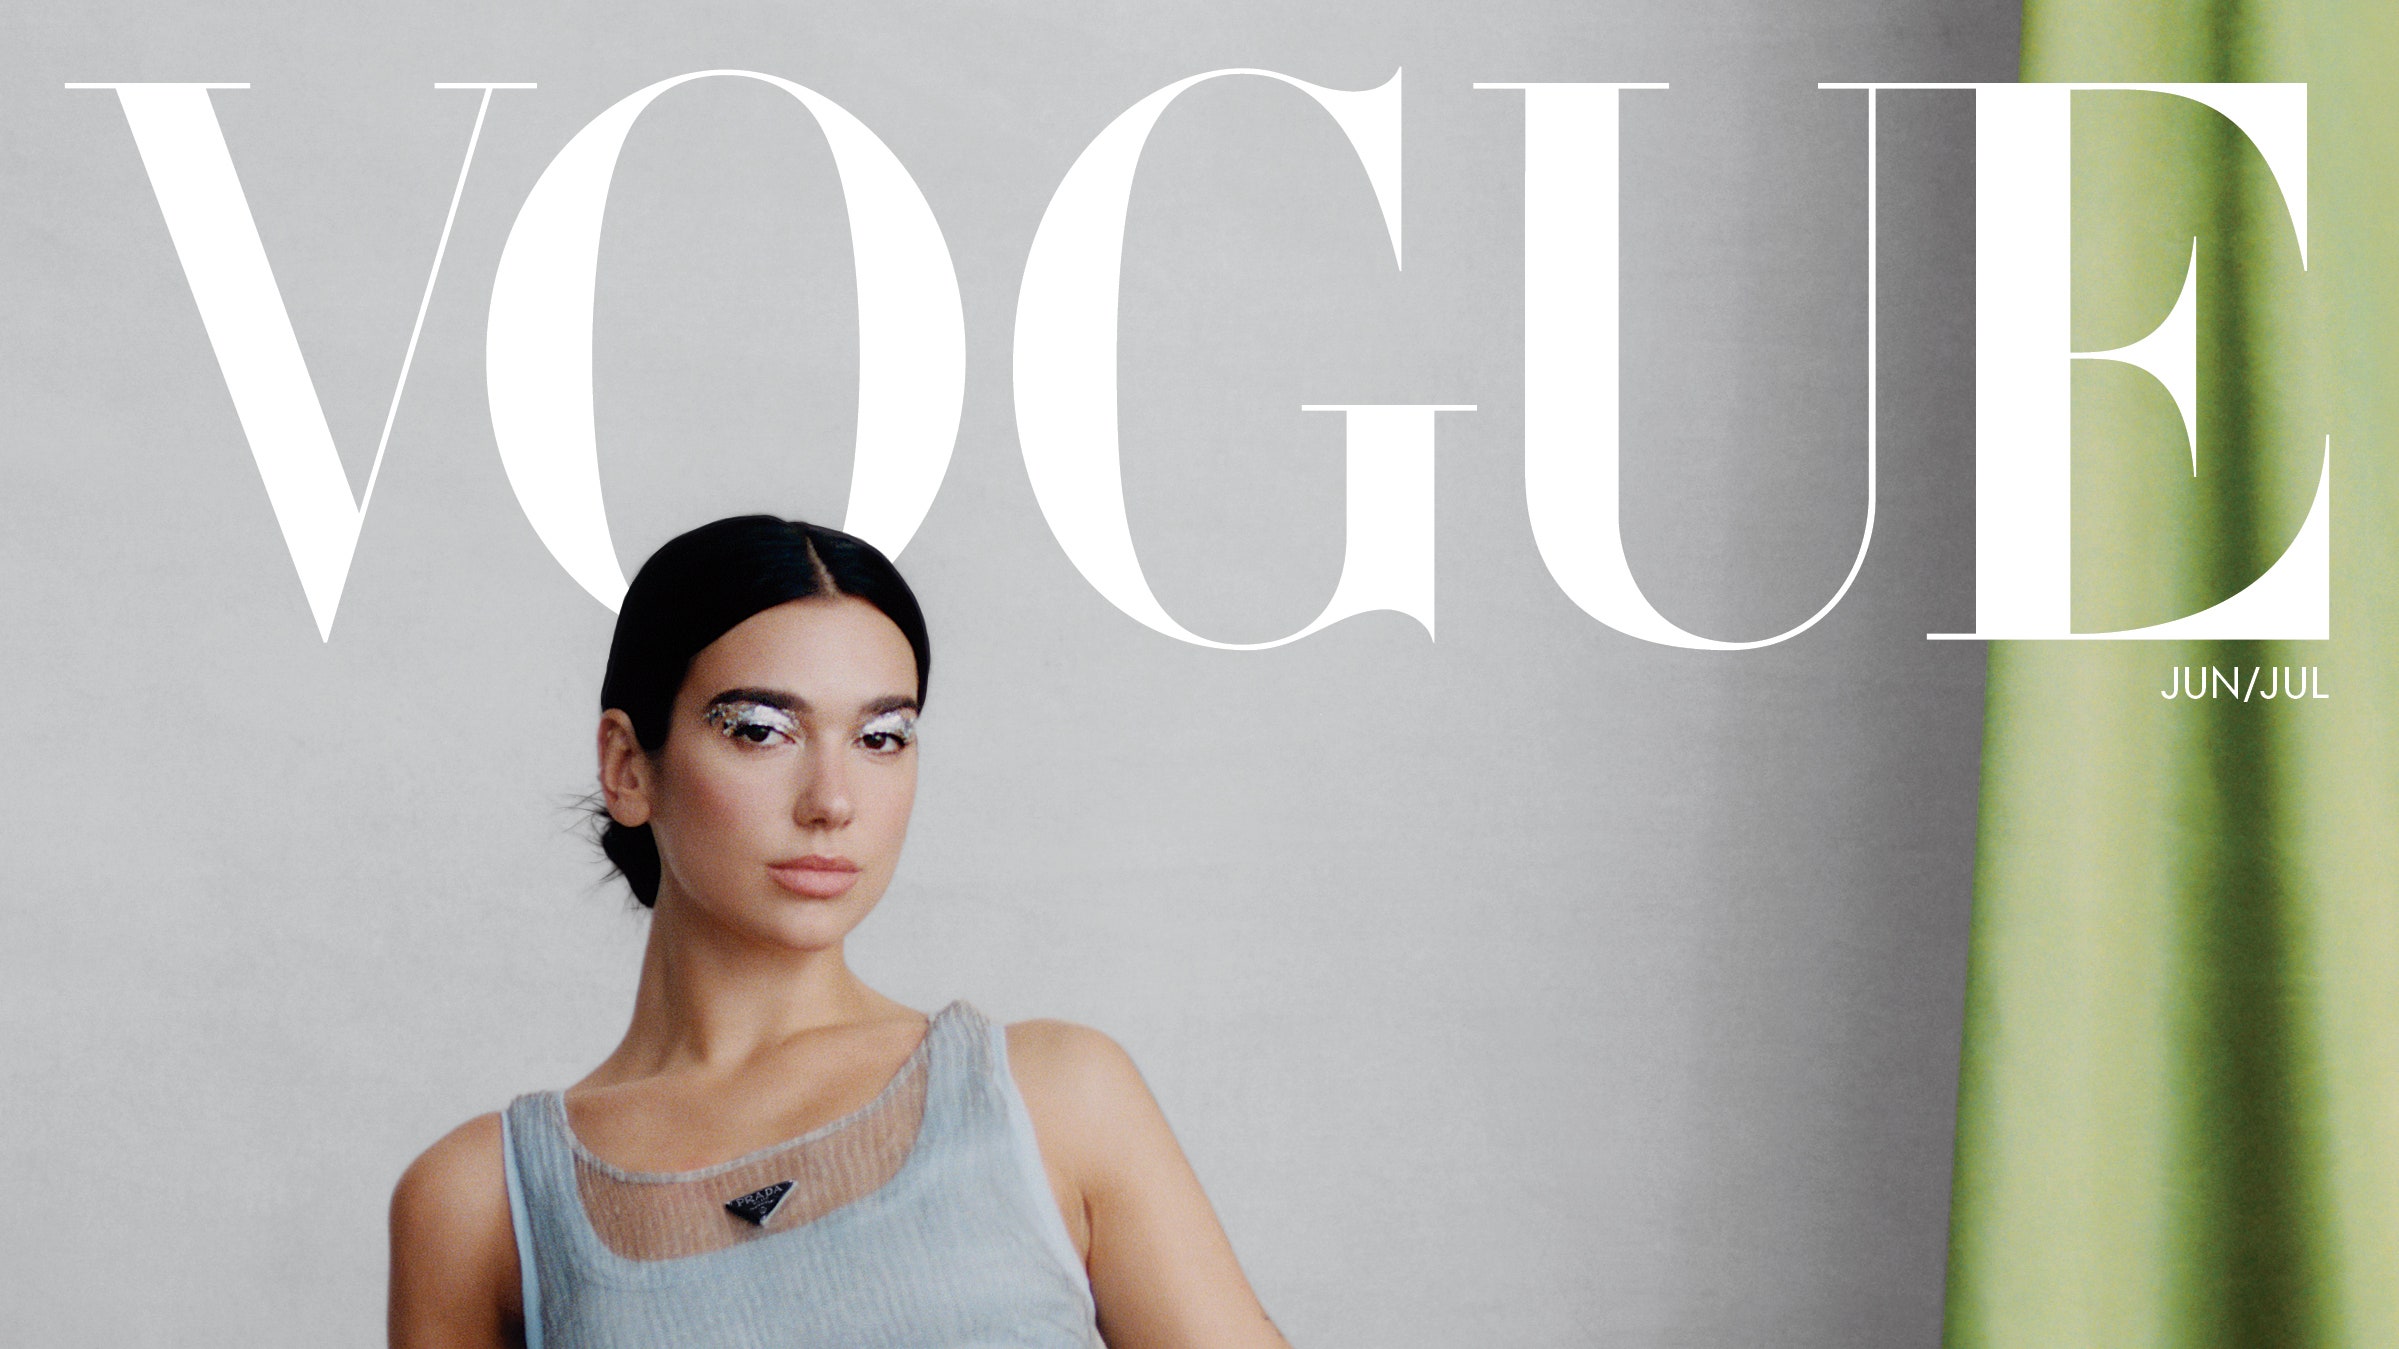 Dua Lipa Portrait For Teen Vogue Wallpapers